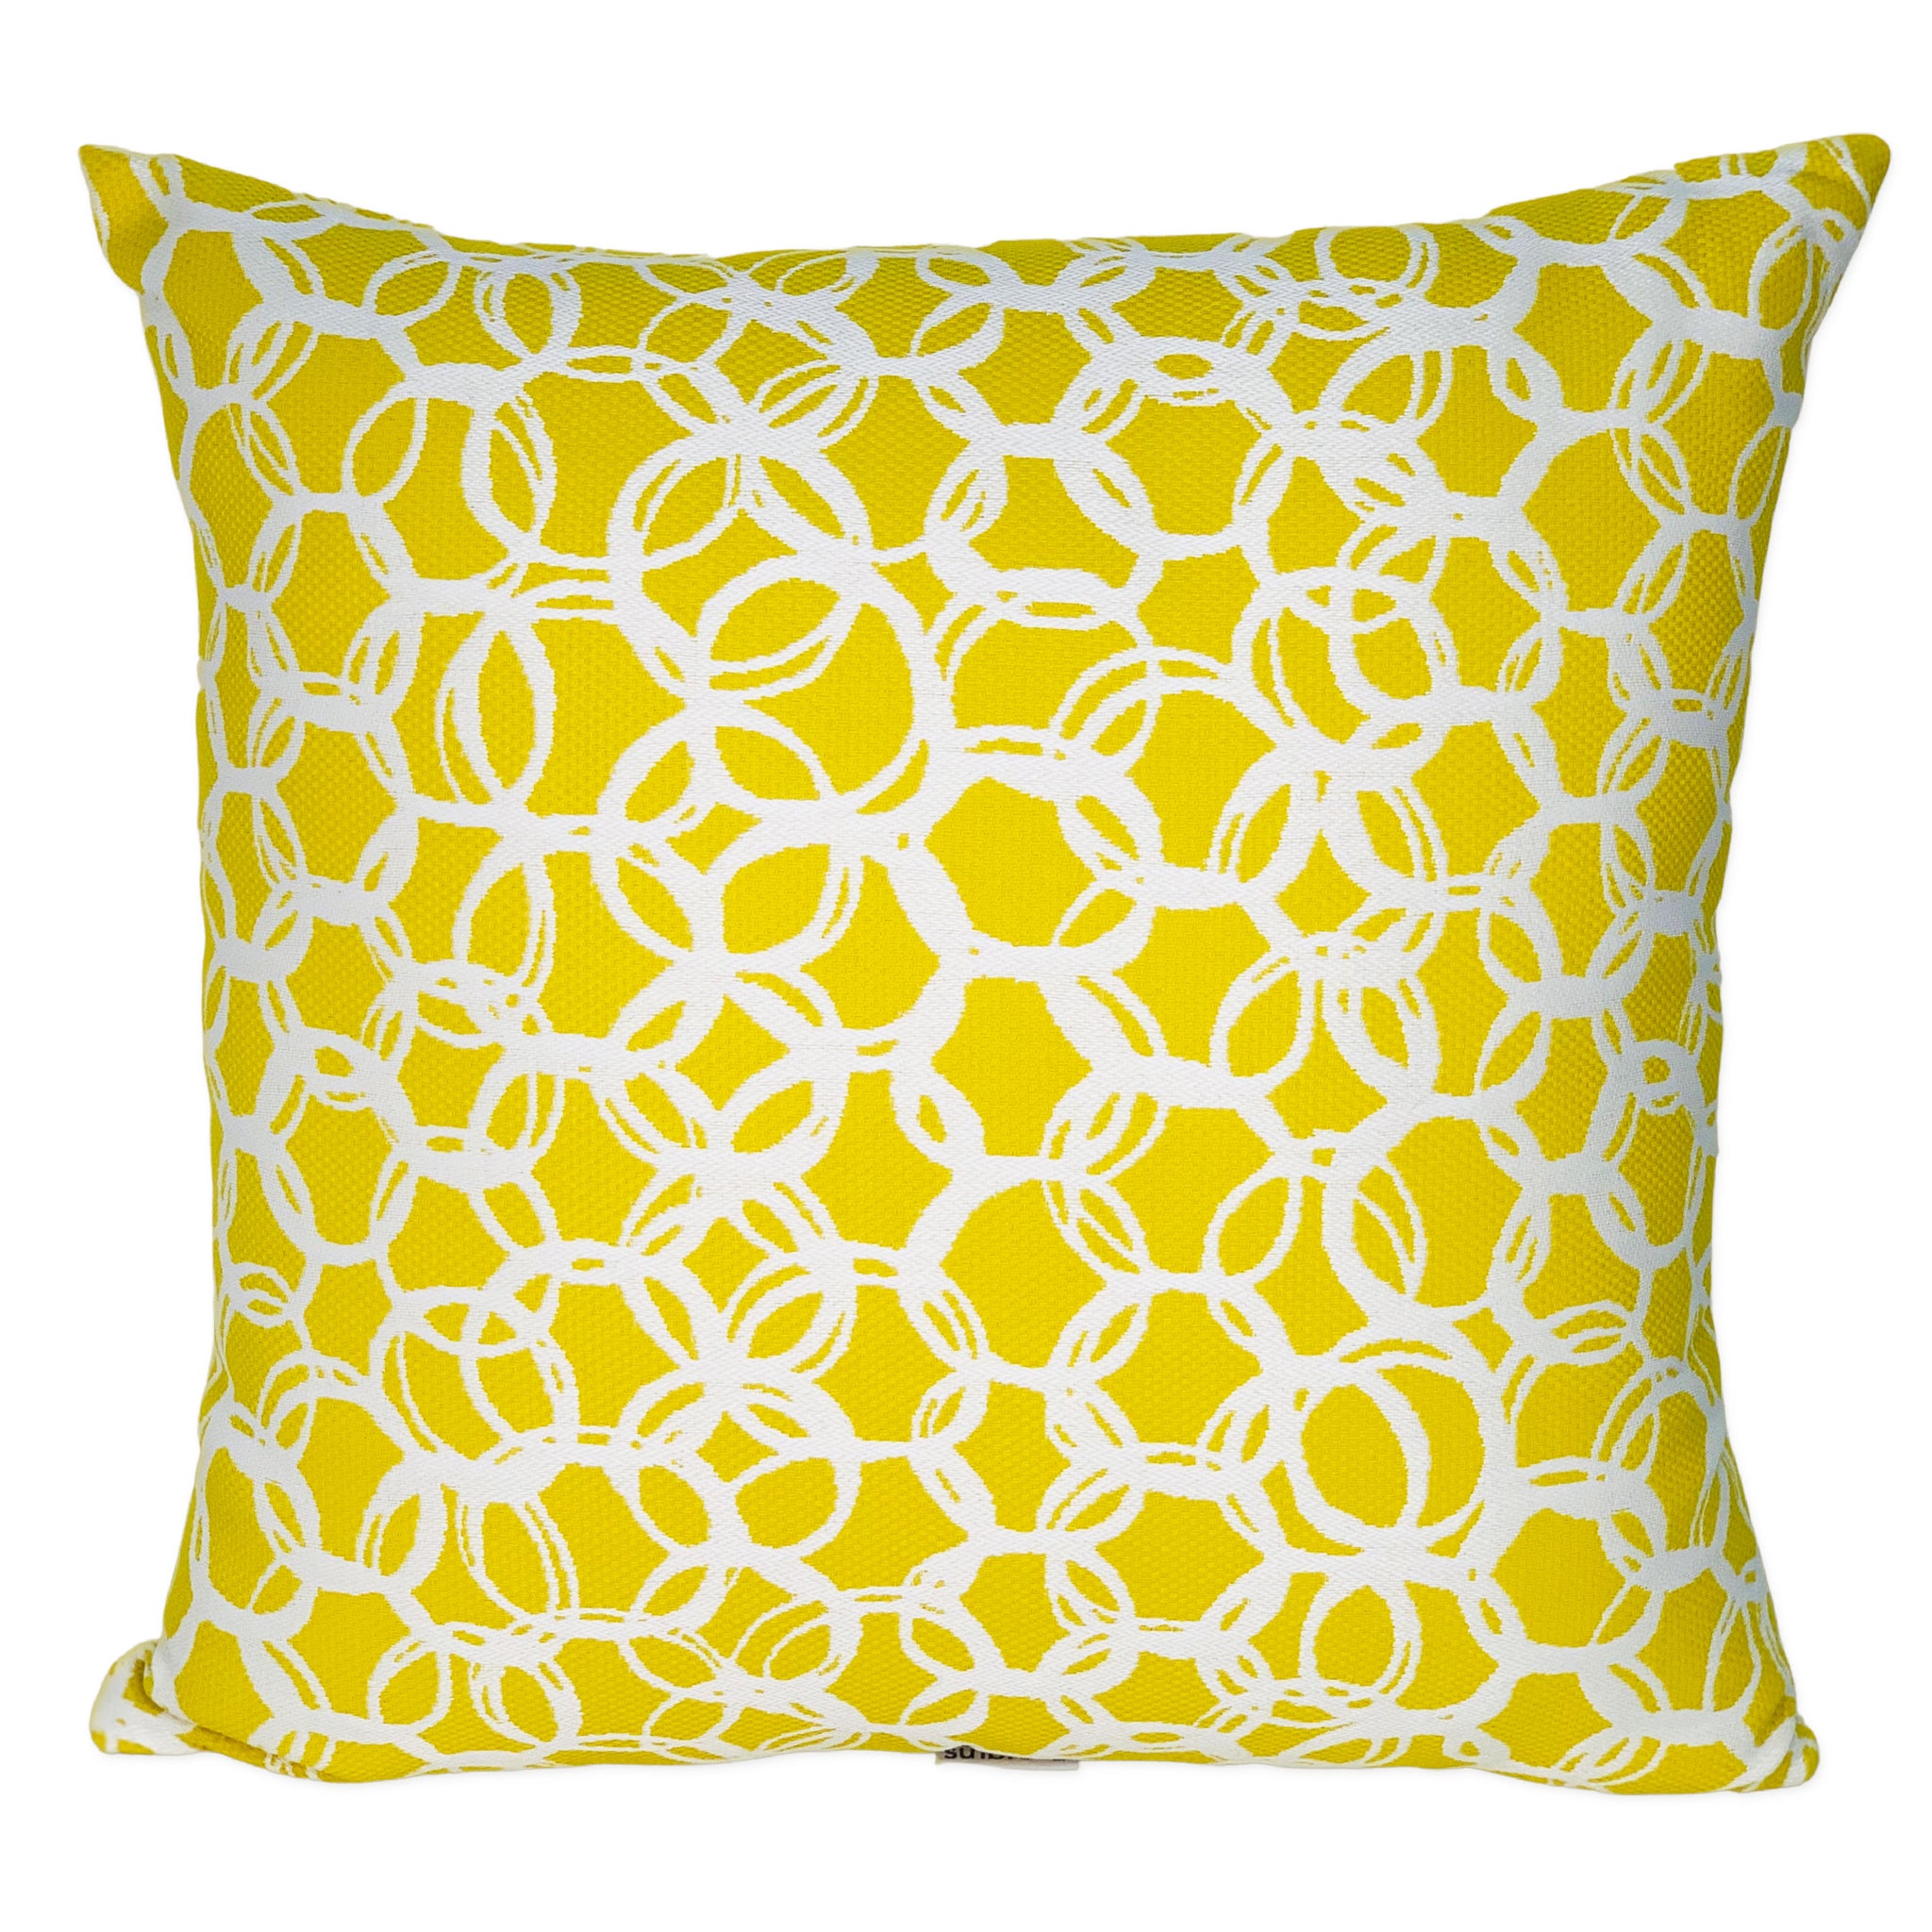 Hoop Pillow Cover in Lemon